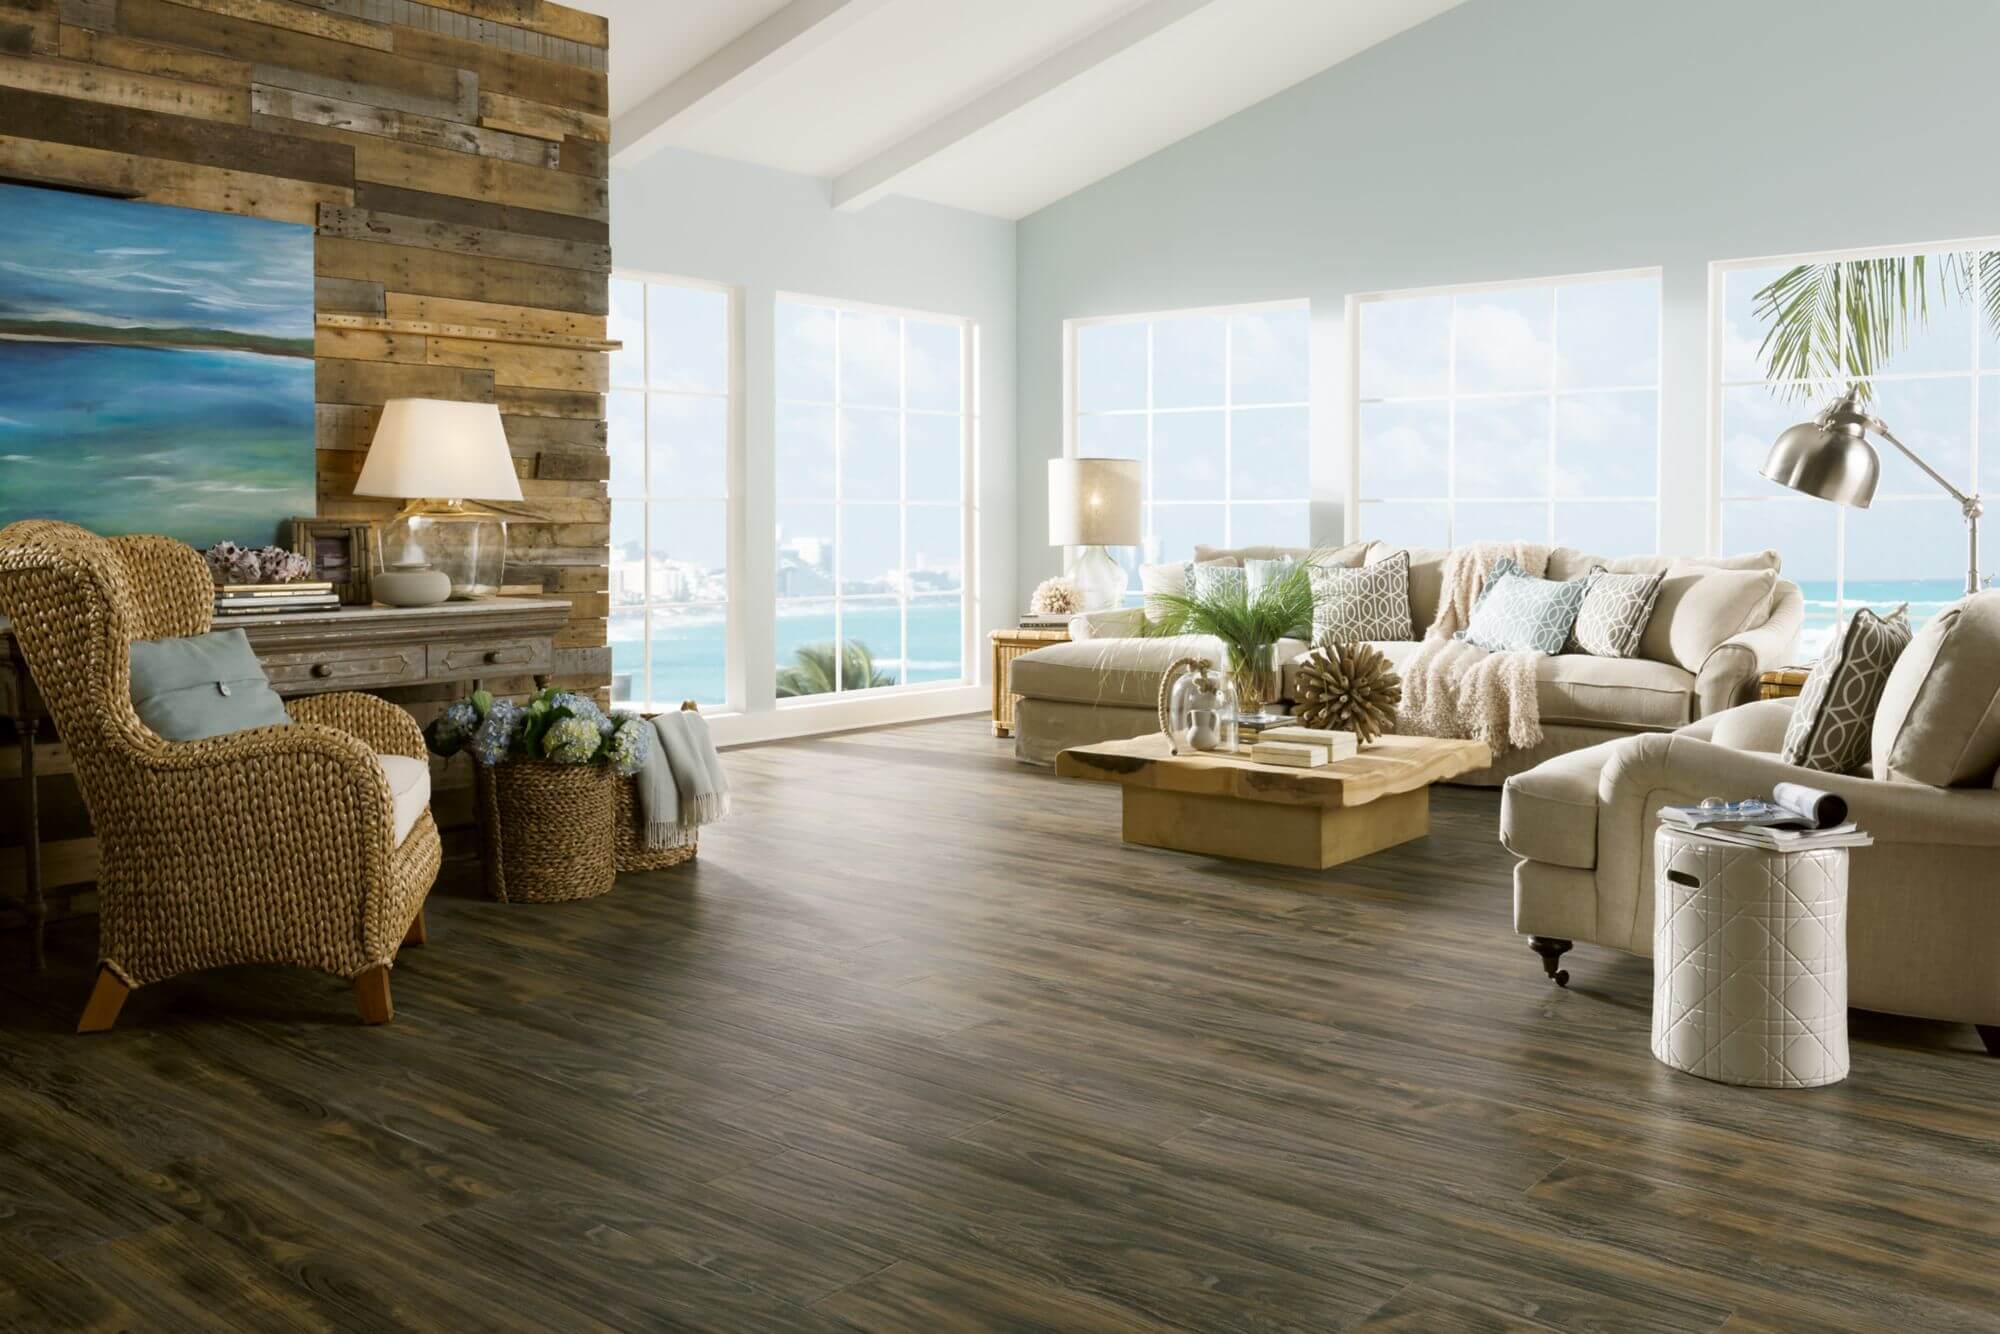 driftwood flooring in living room